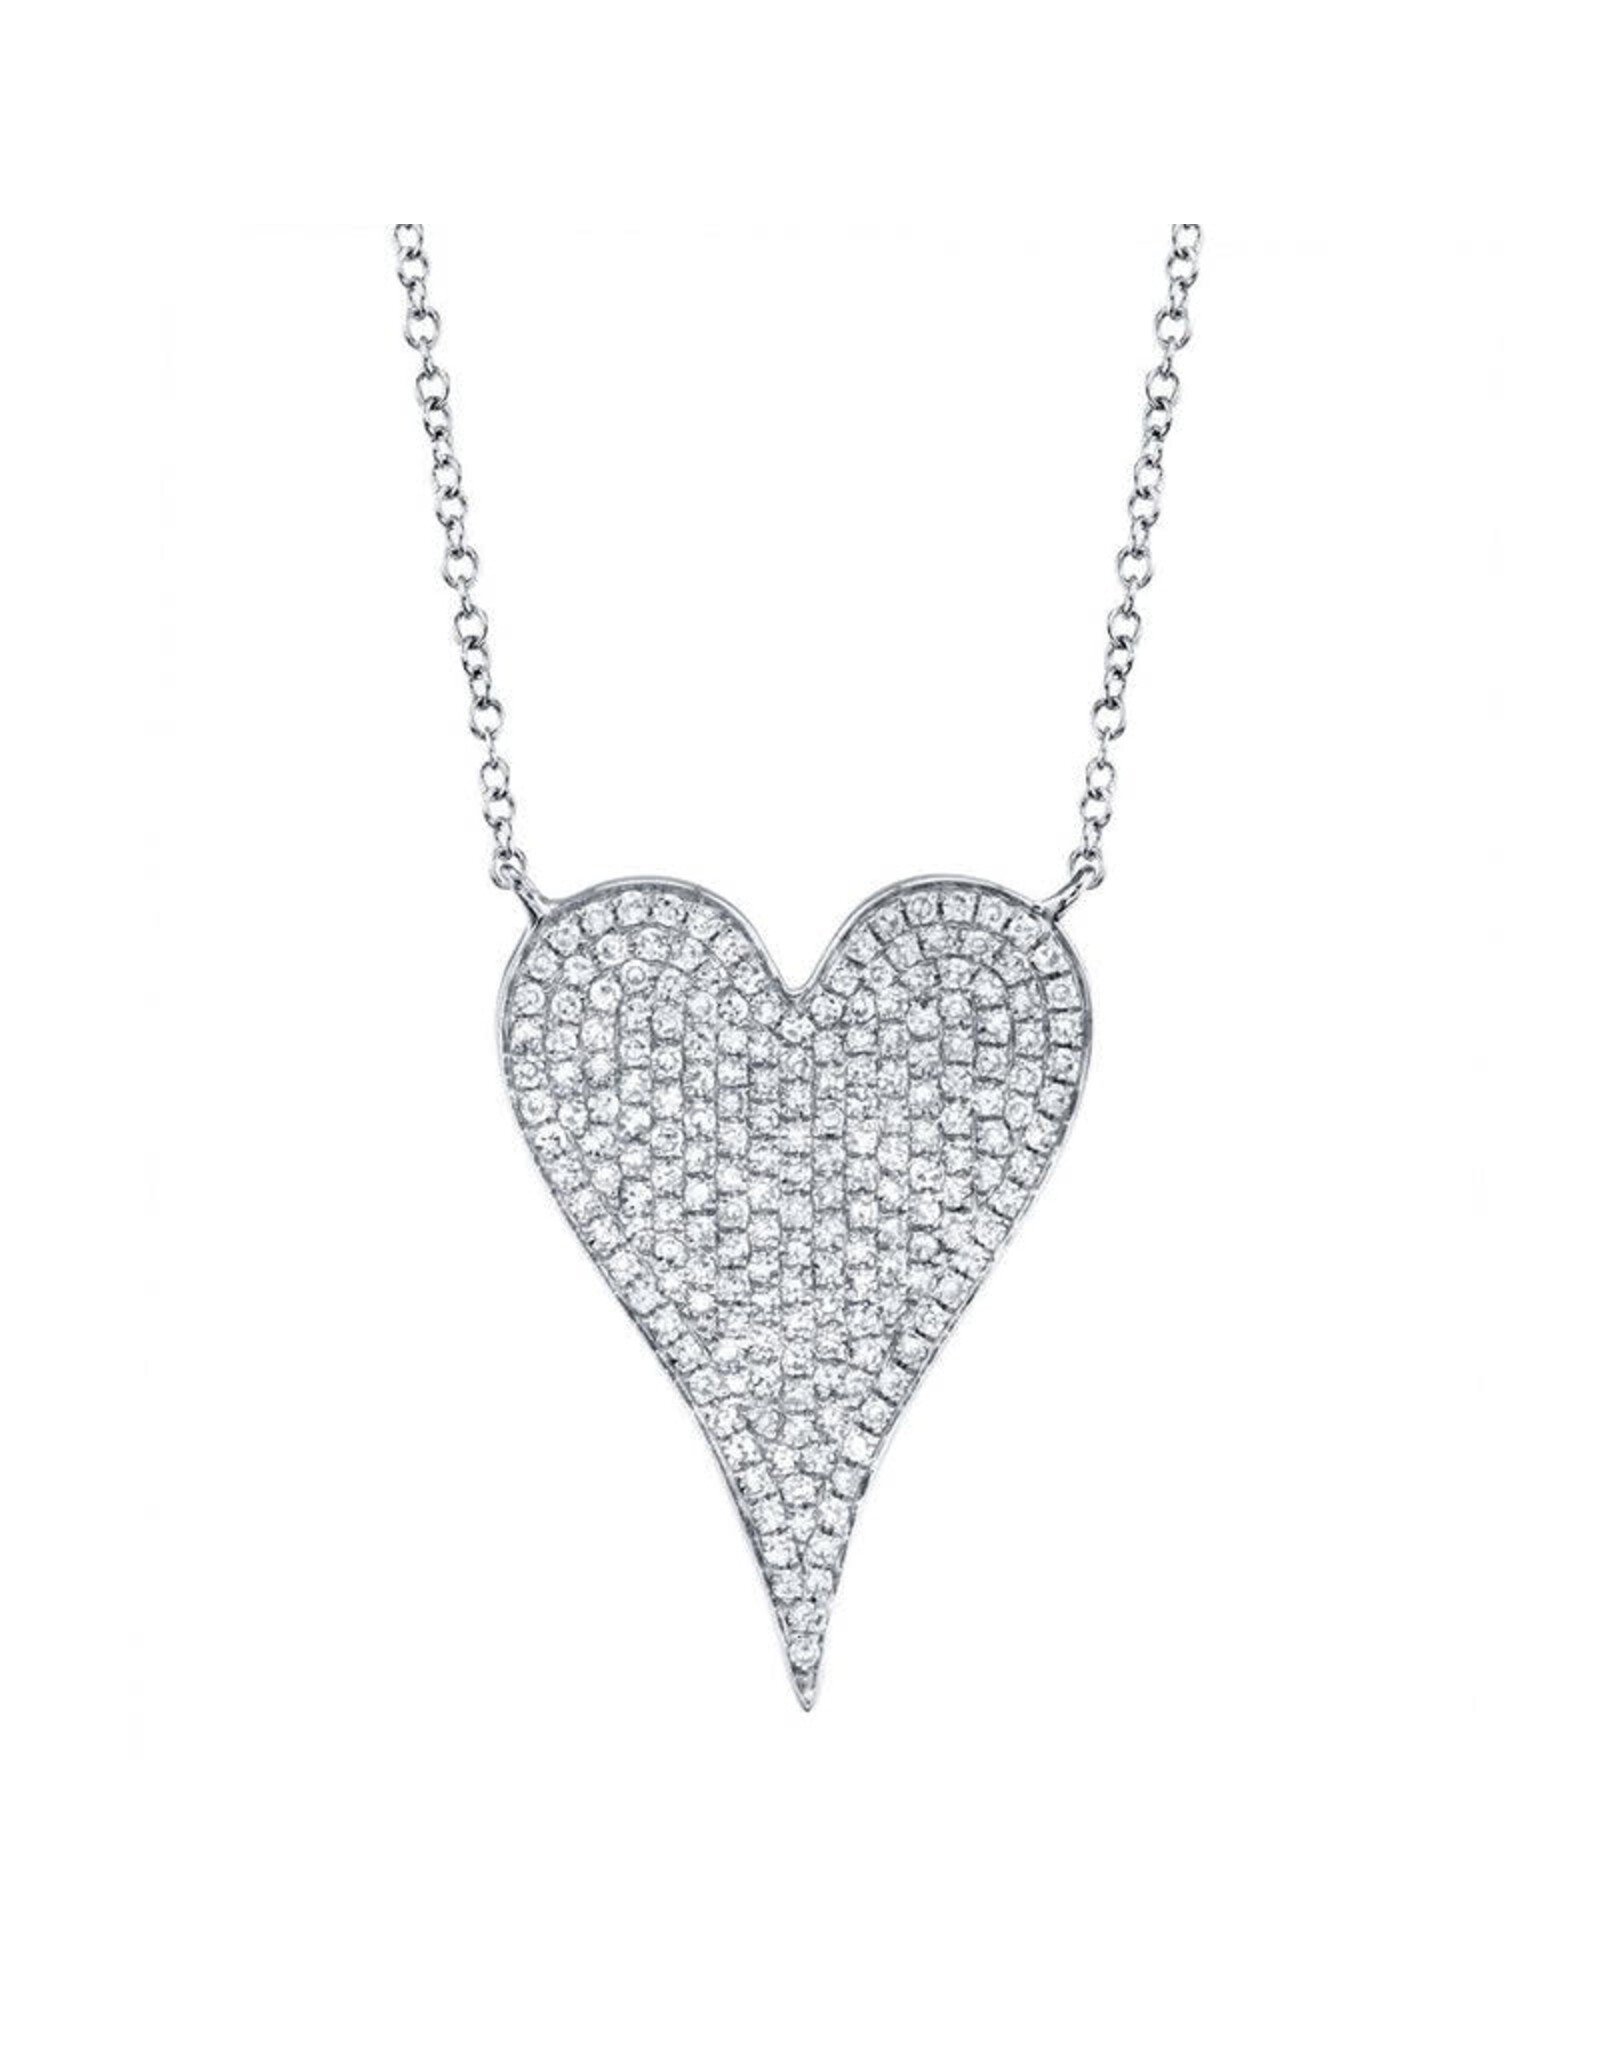 14K White Gold Large Pave Diamond Heart Necklace, D: 0.43ct